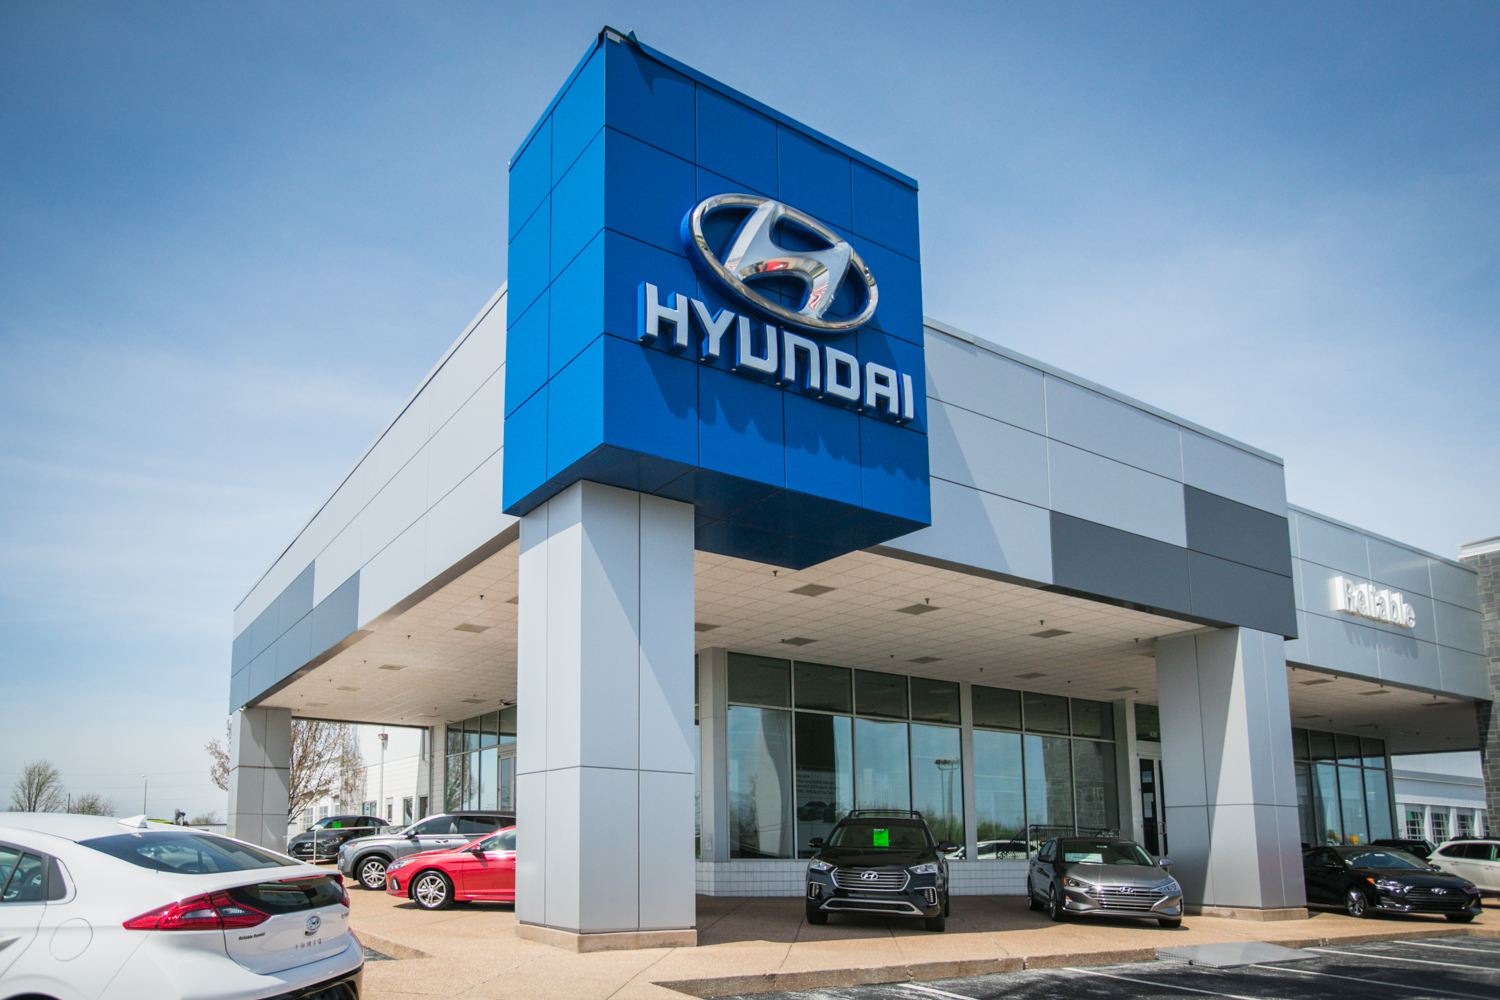 Springfield Hyundai Lease Deals Len piercy